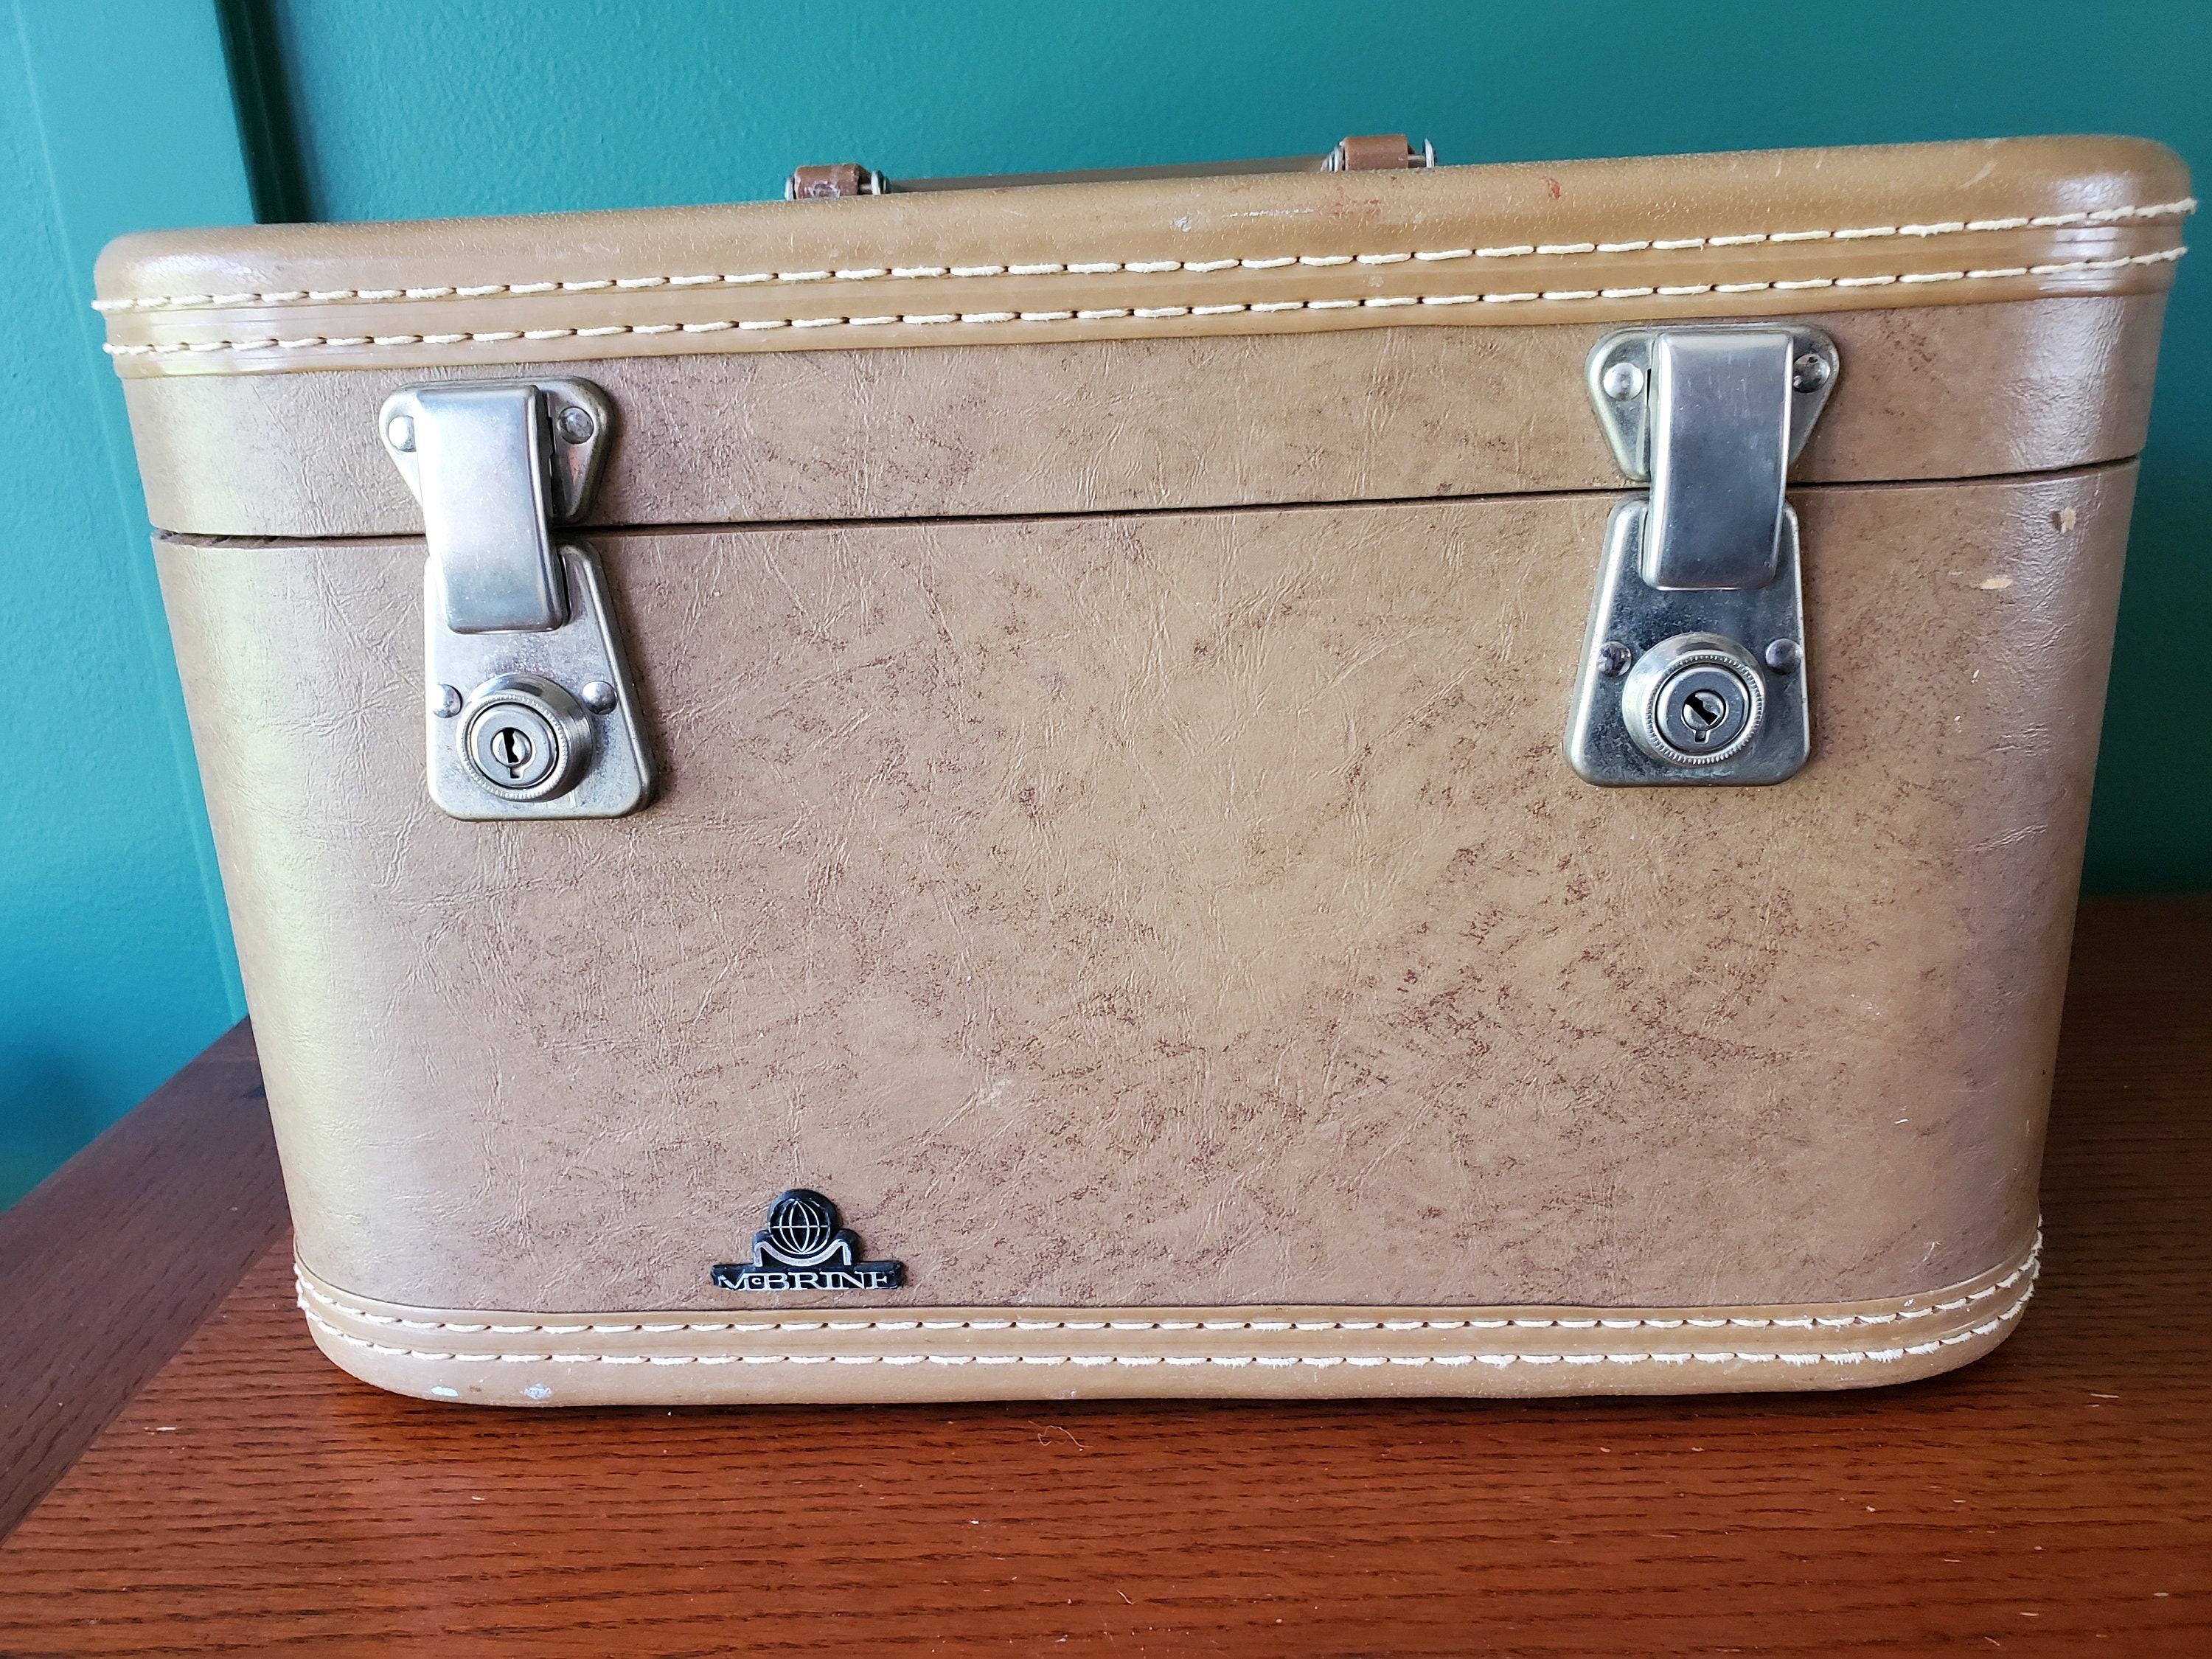 Louis Vuitton Original 1940s Hard Leather Monogram Suitcase - Ruby